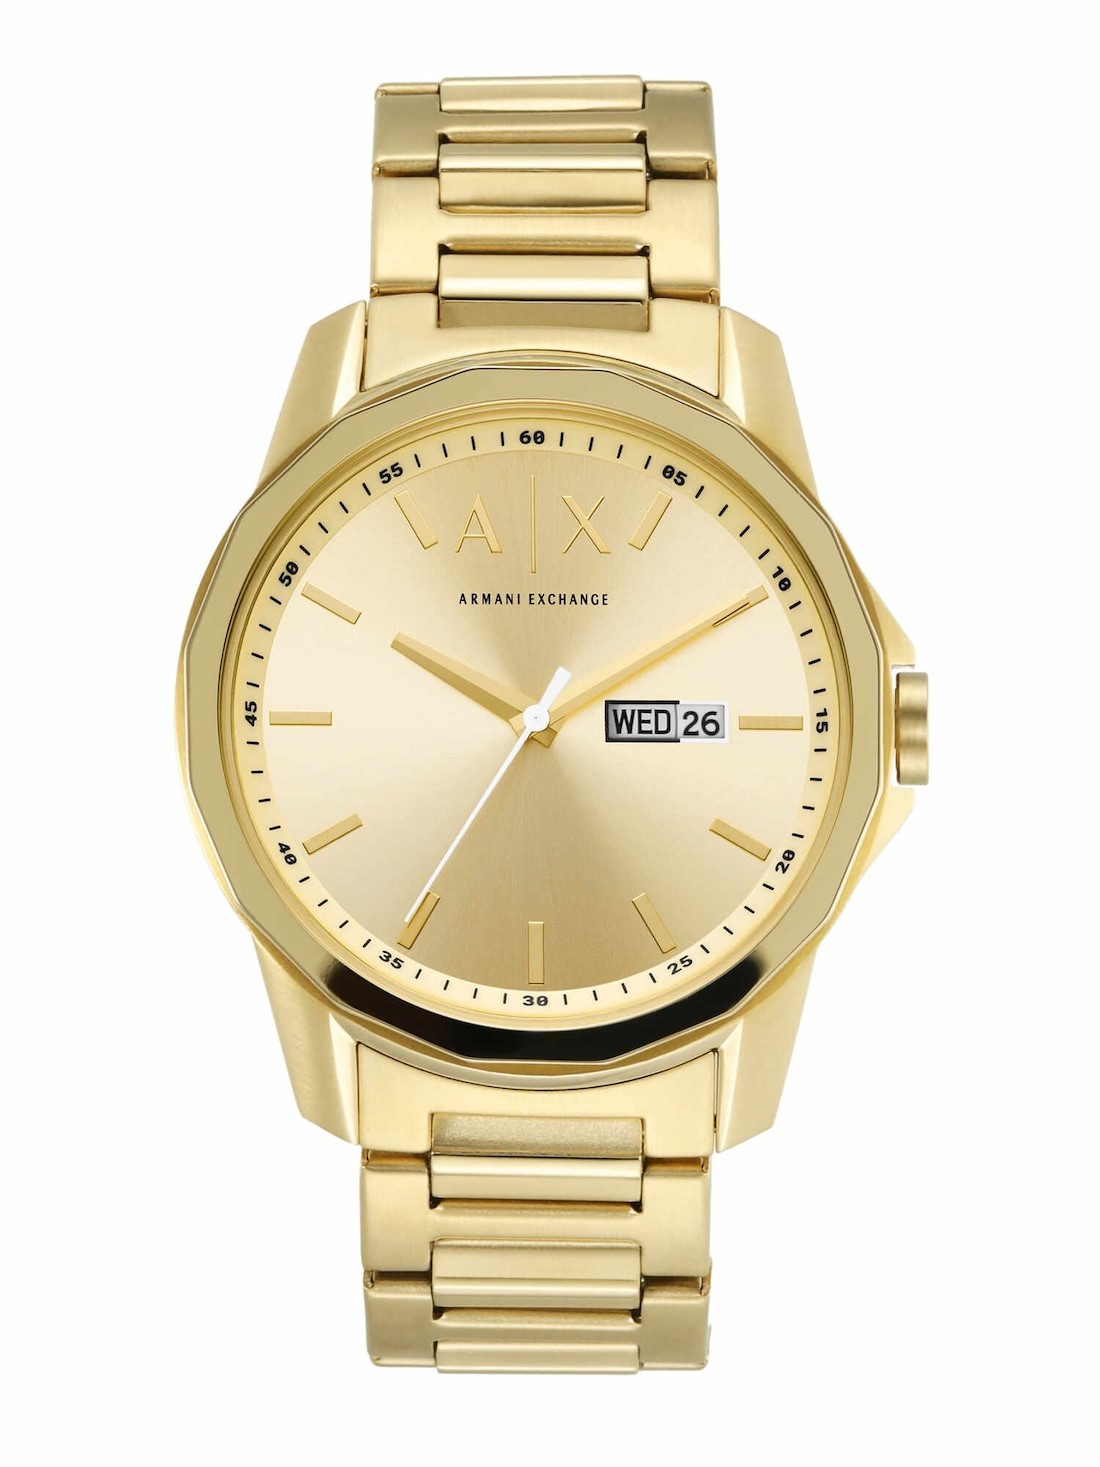 Armani Exchange Gold Watch AX1734 - Watch Station India